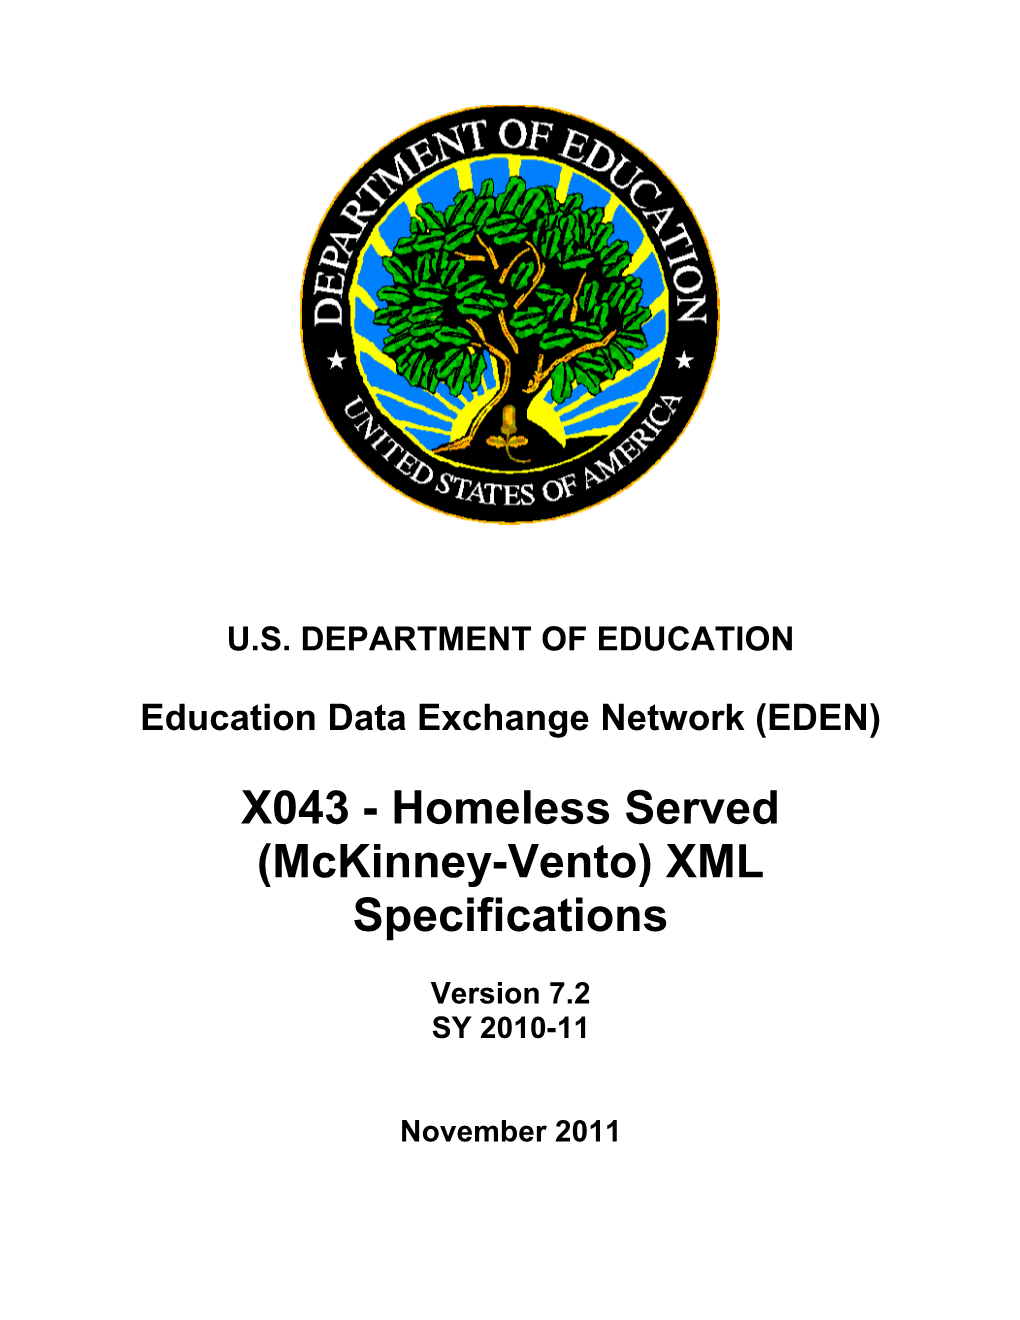 Homeless Served (Mckinney-Vento) XML Specifications